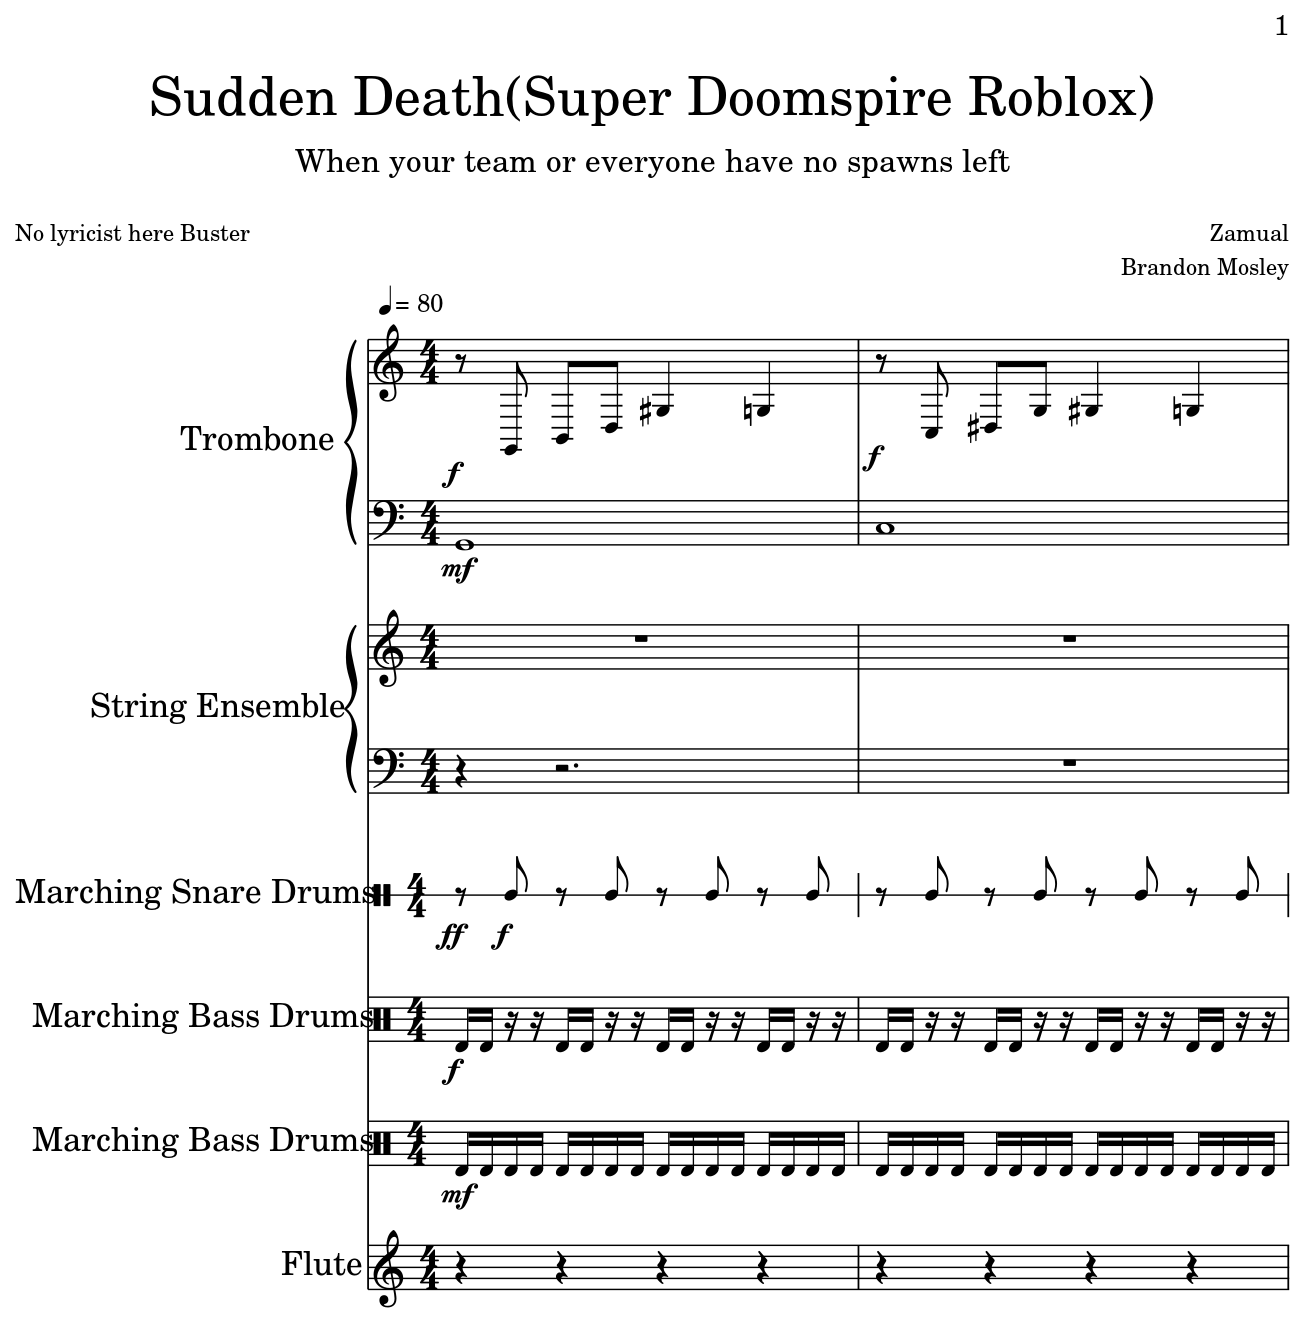 Sudden Death Super Doomspire Roblox Flat - roblox drums